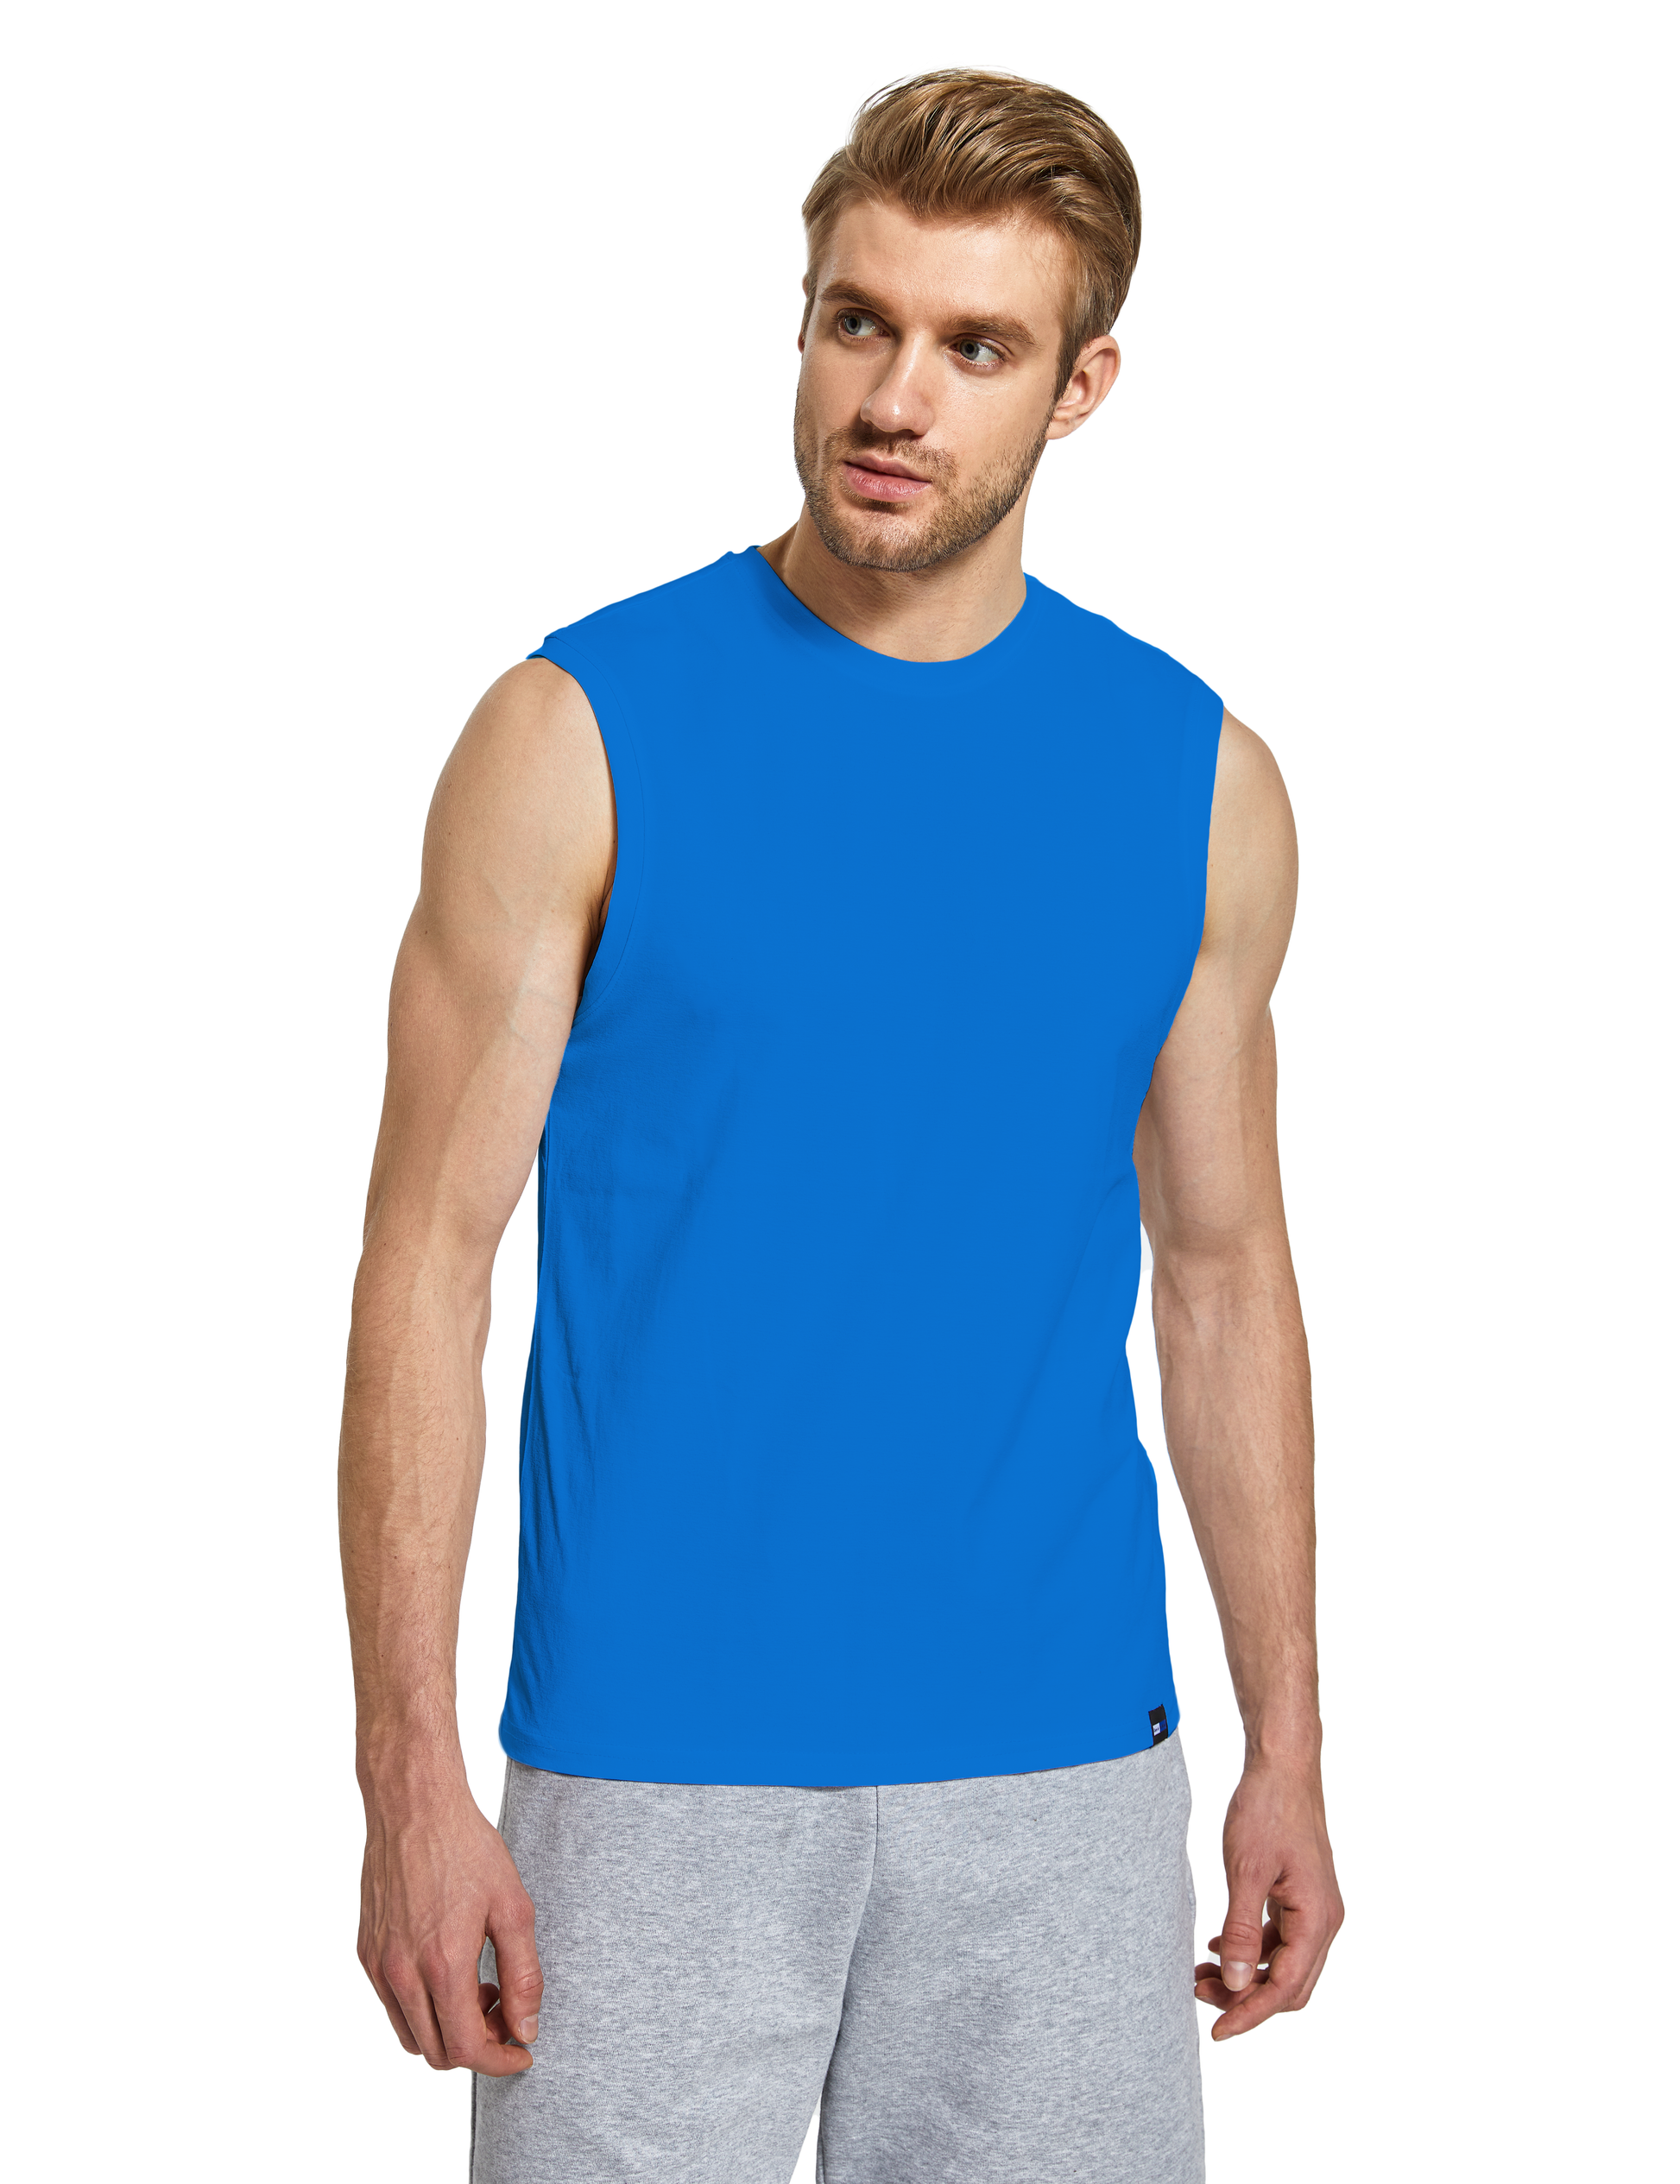 mens sleeveless shirts blue